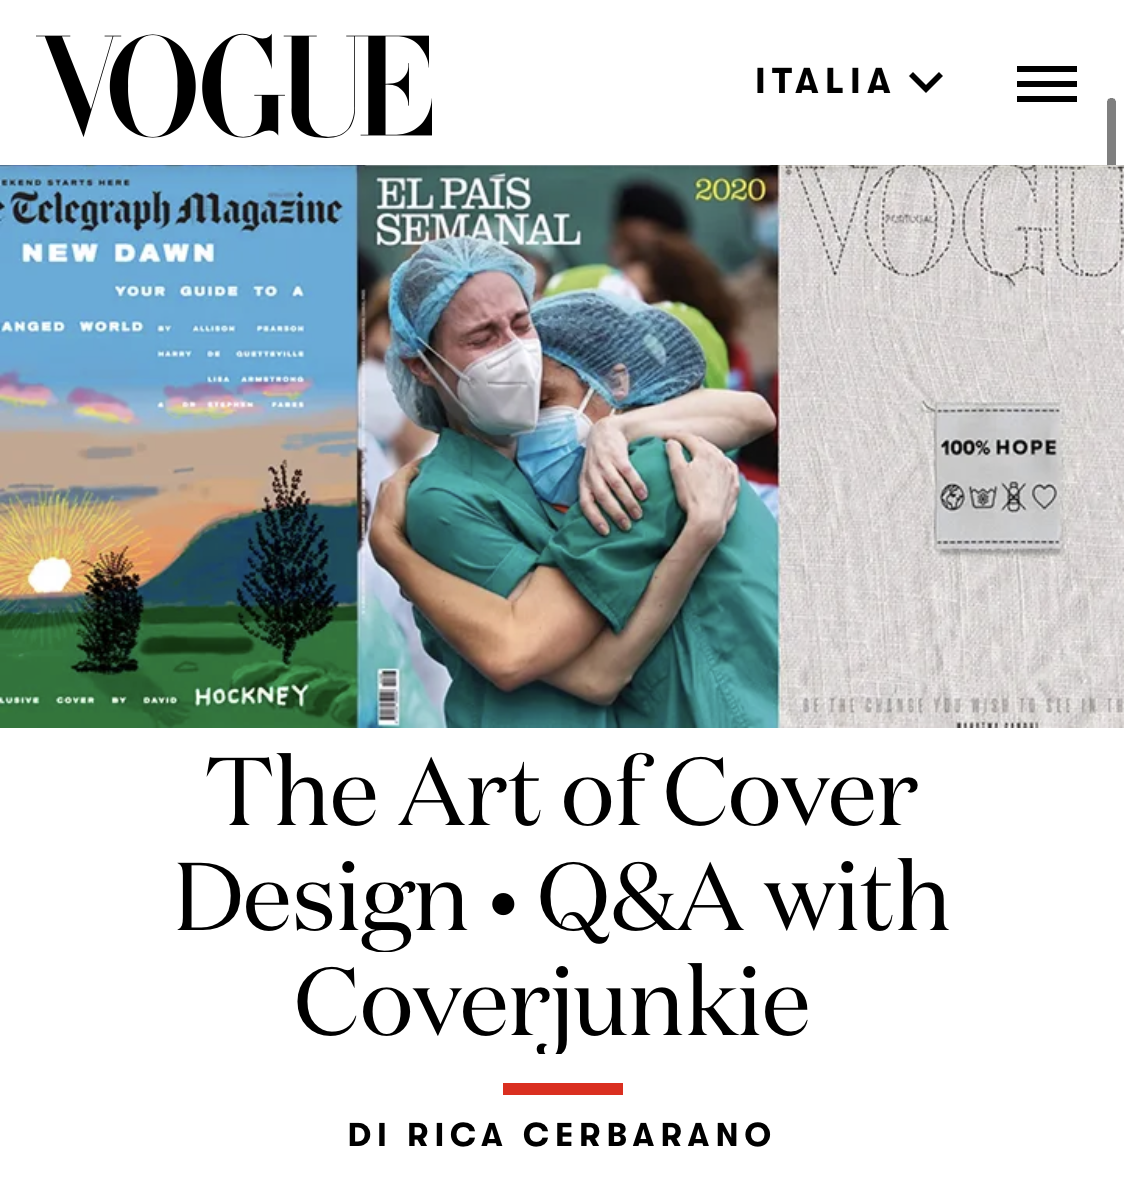 29/12/2020 Q&A Vogue Italia